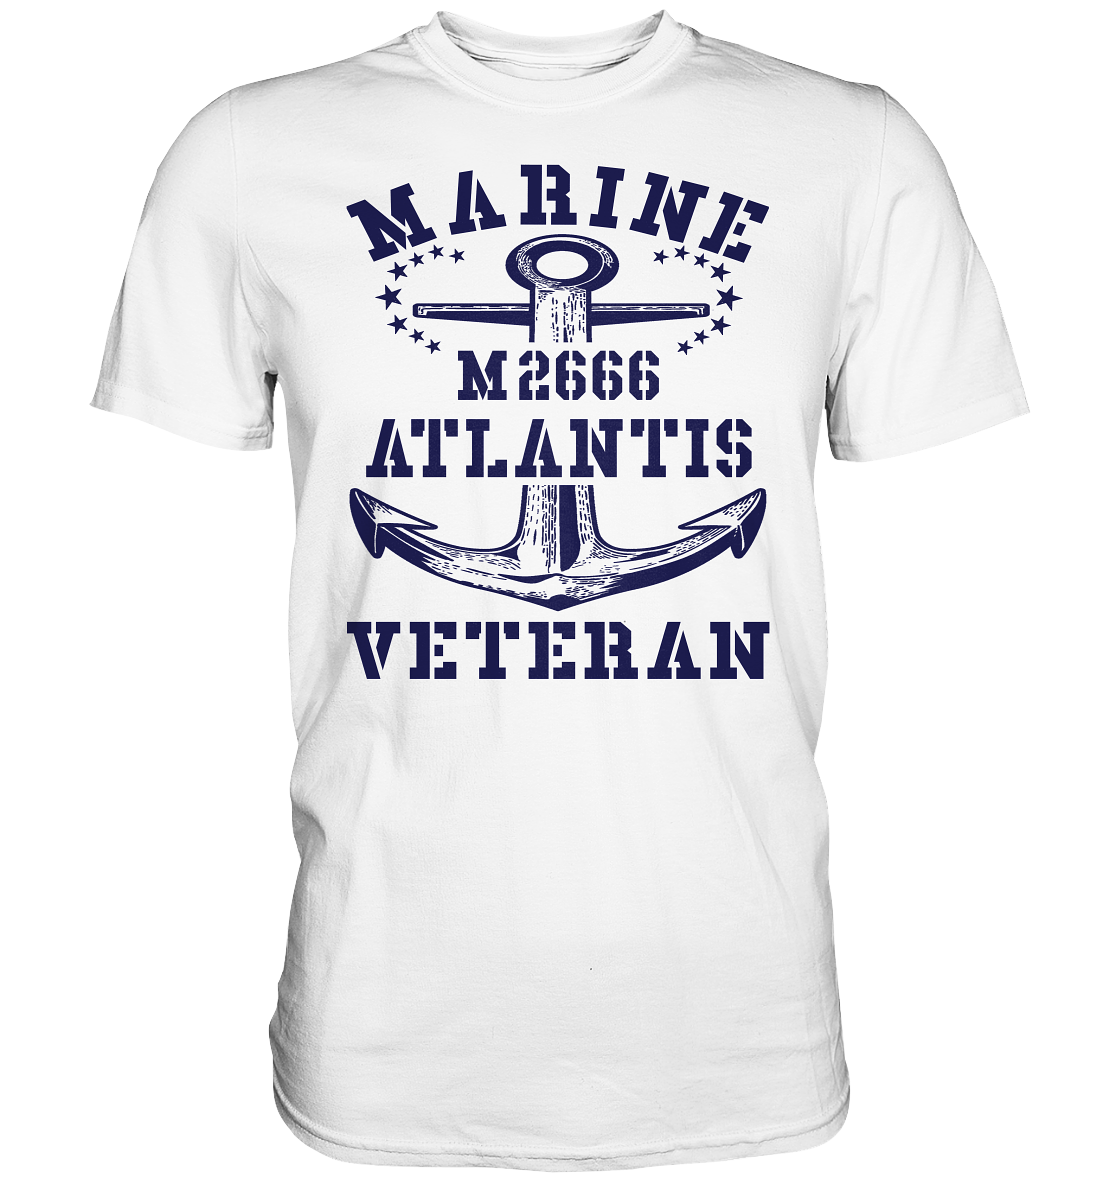 BiMi M2666 ATLANTIS Marine Veteran - Premium Shirt